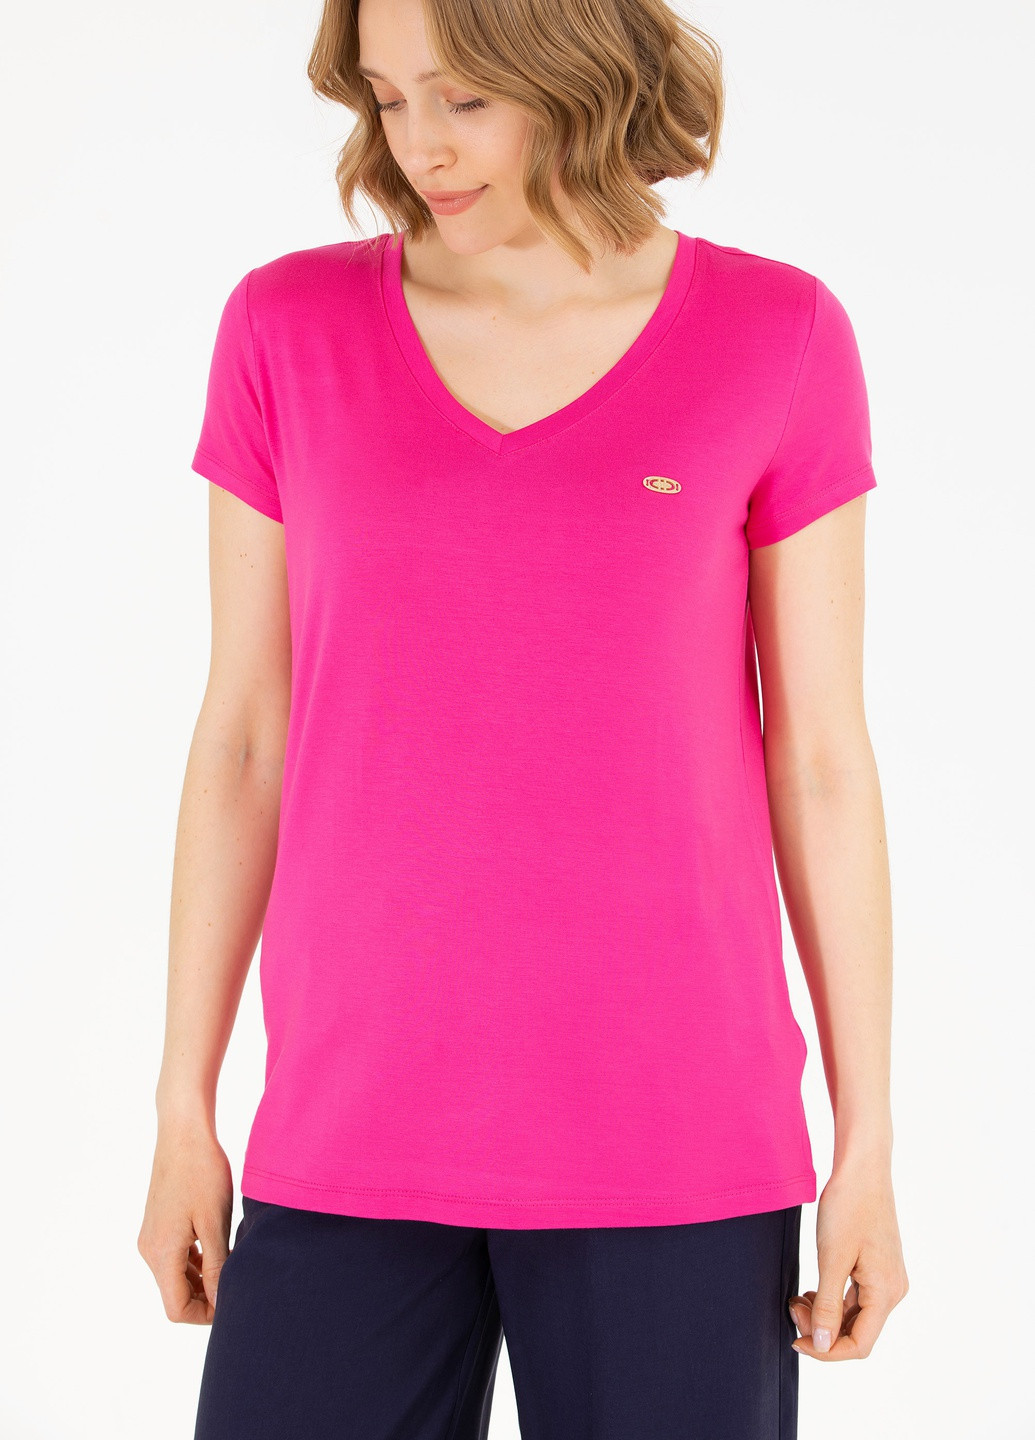 Кислотно-розовая футболка u.s.polo assn женская U.S. Polo Assn.